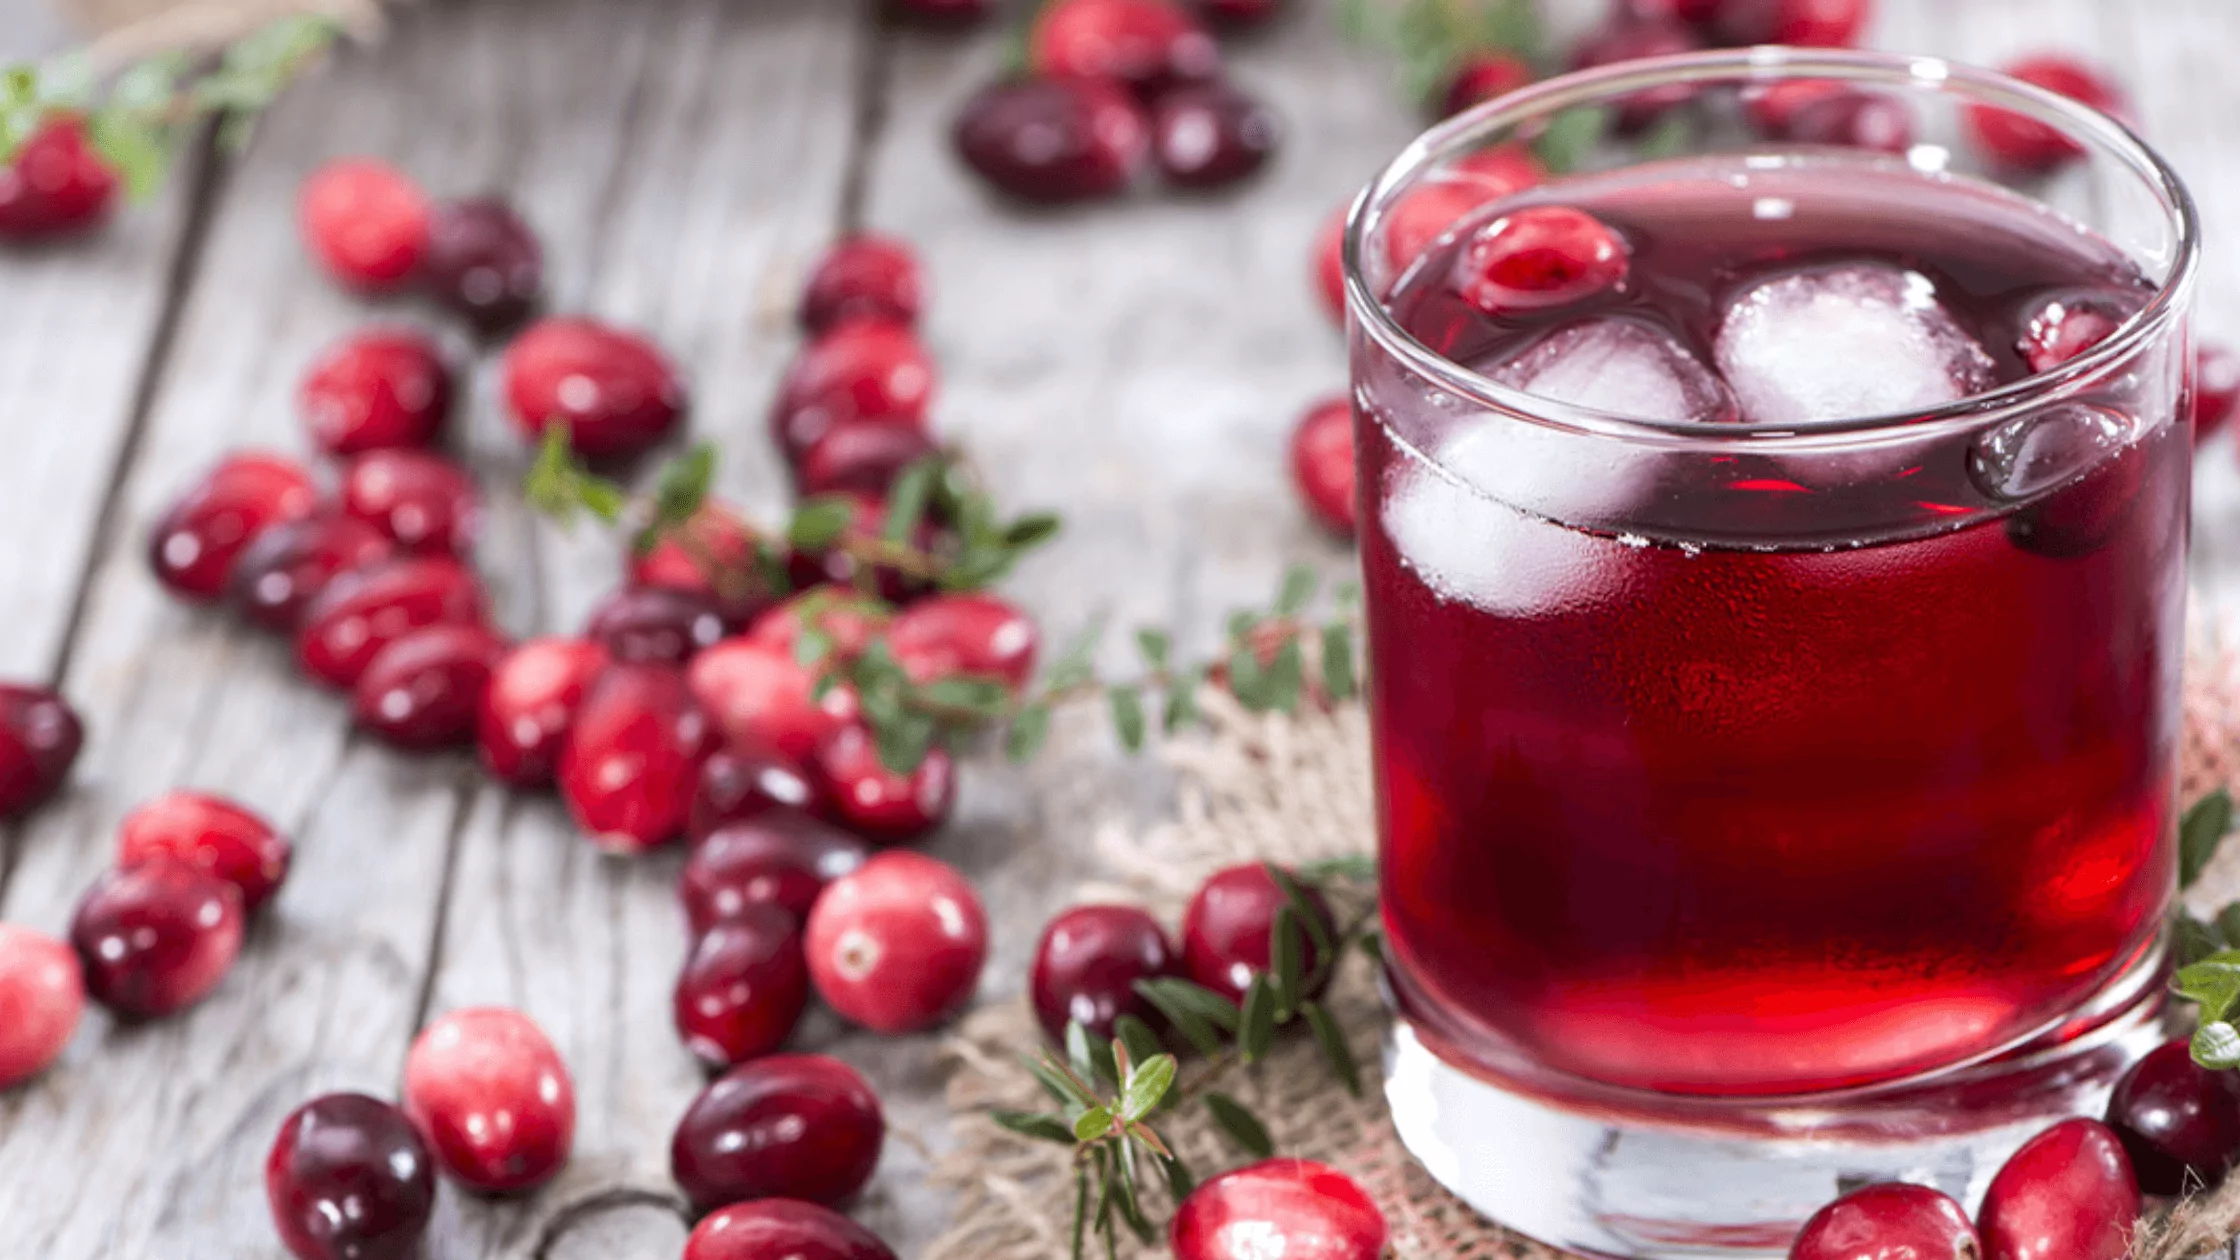 Ocean Spray Cranberry Juice Good for High cholesterol